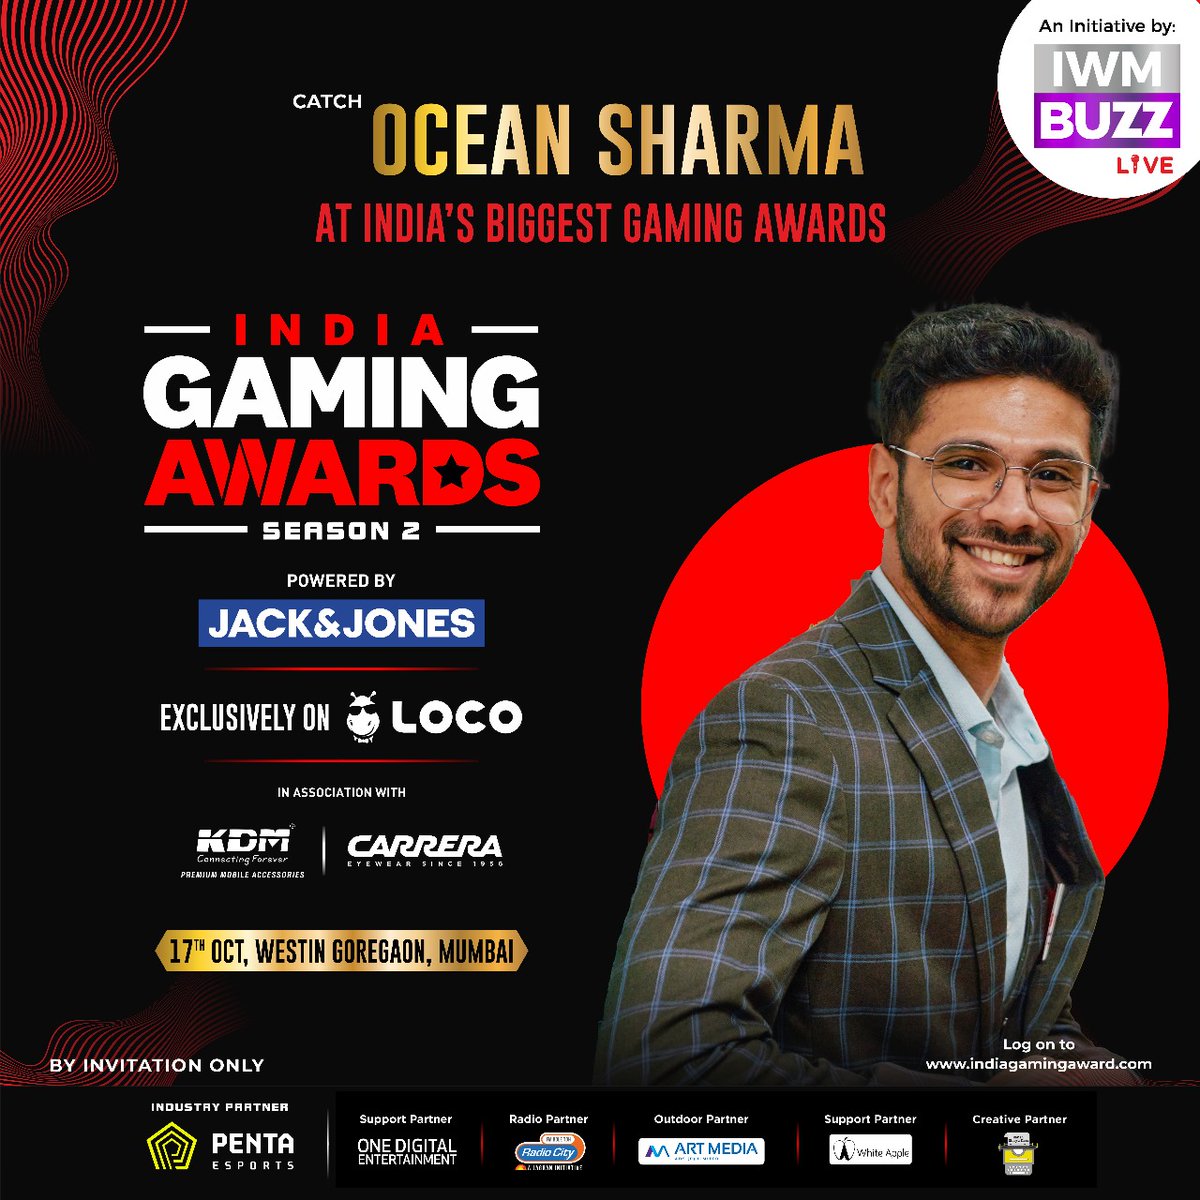 IWMBuzz on X: Announcing: Nominees For Stylish Gamer Of The Year - Male At India  Gaming Awards Season 2, India's Biggest Gaming Awards Entertainment Night  #OceanSharma @lameboredghini #GulrezKhan #JokerKiHaveli #RajVarma #Snax  @SnaxGamingg #